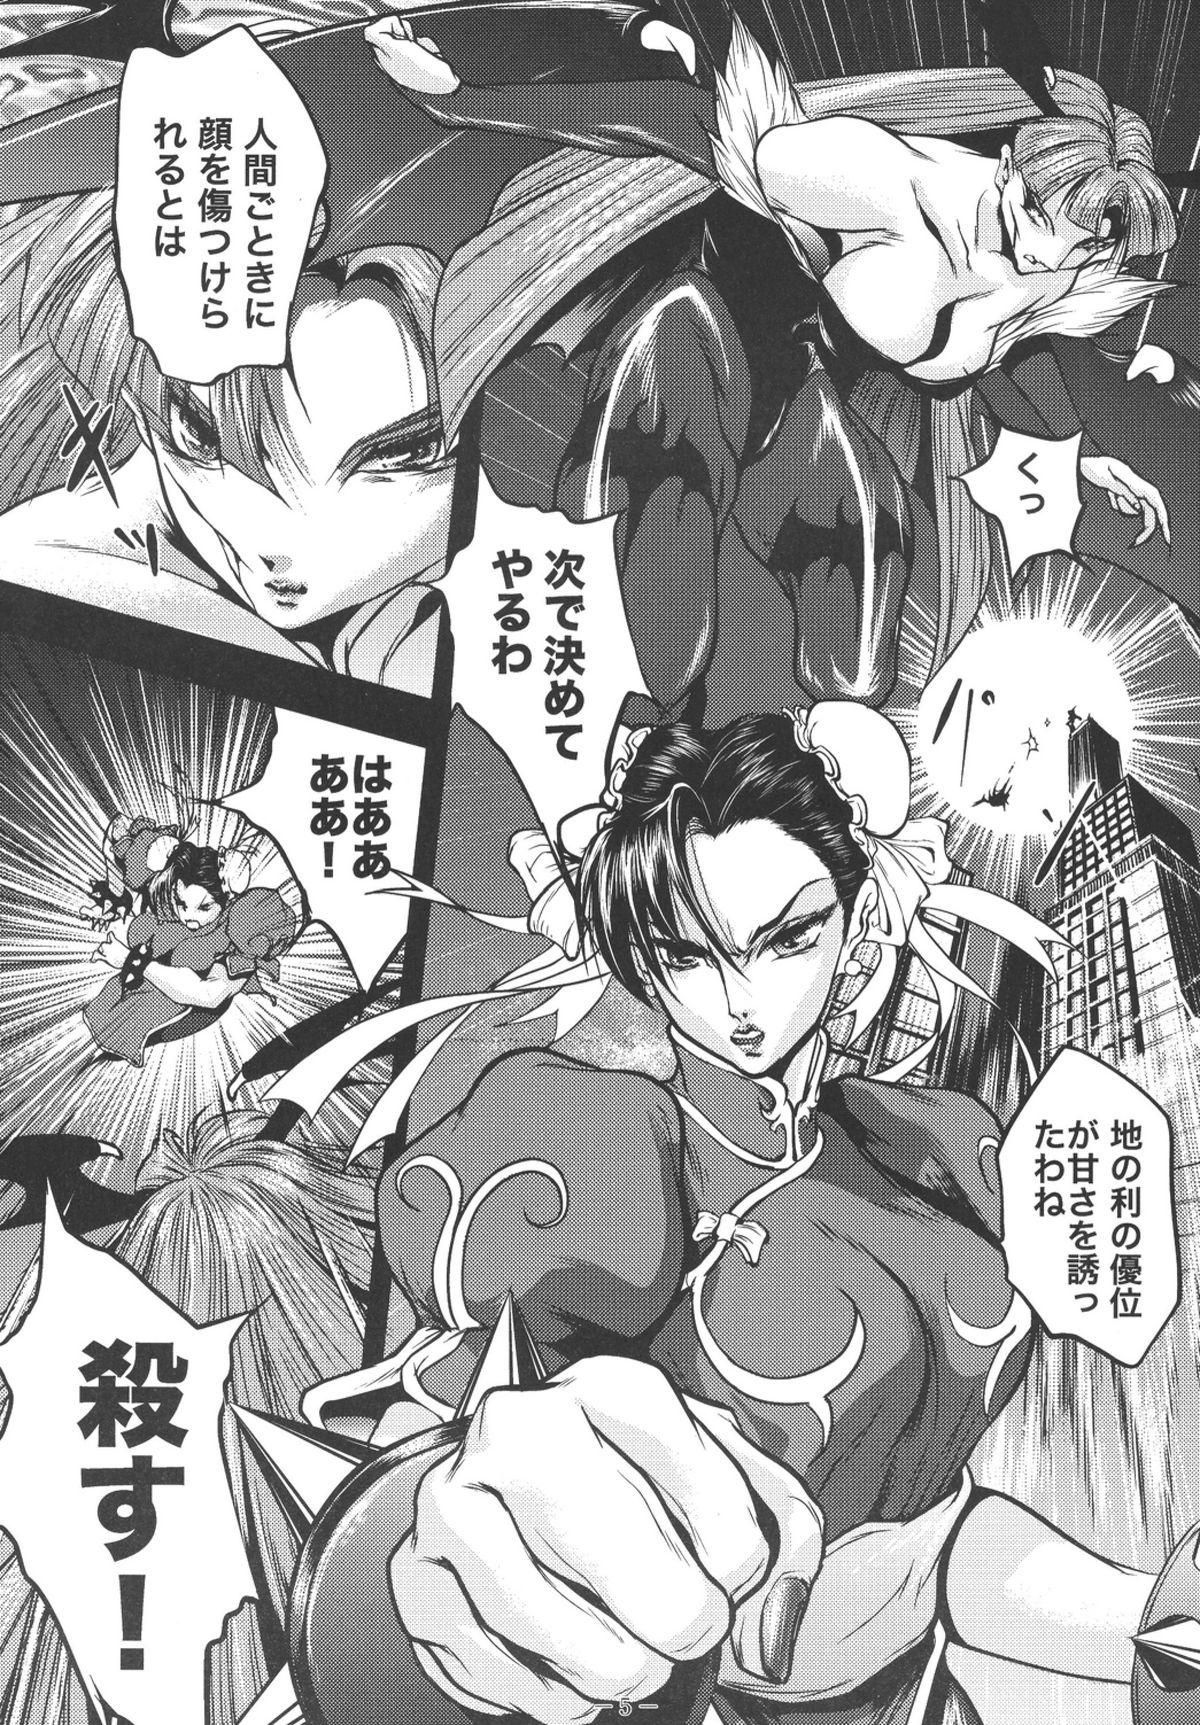 Ingoku no Ikusa Megami Battle Queen 4